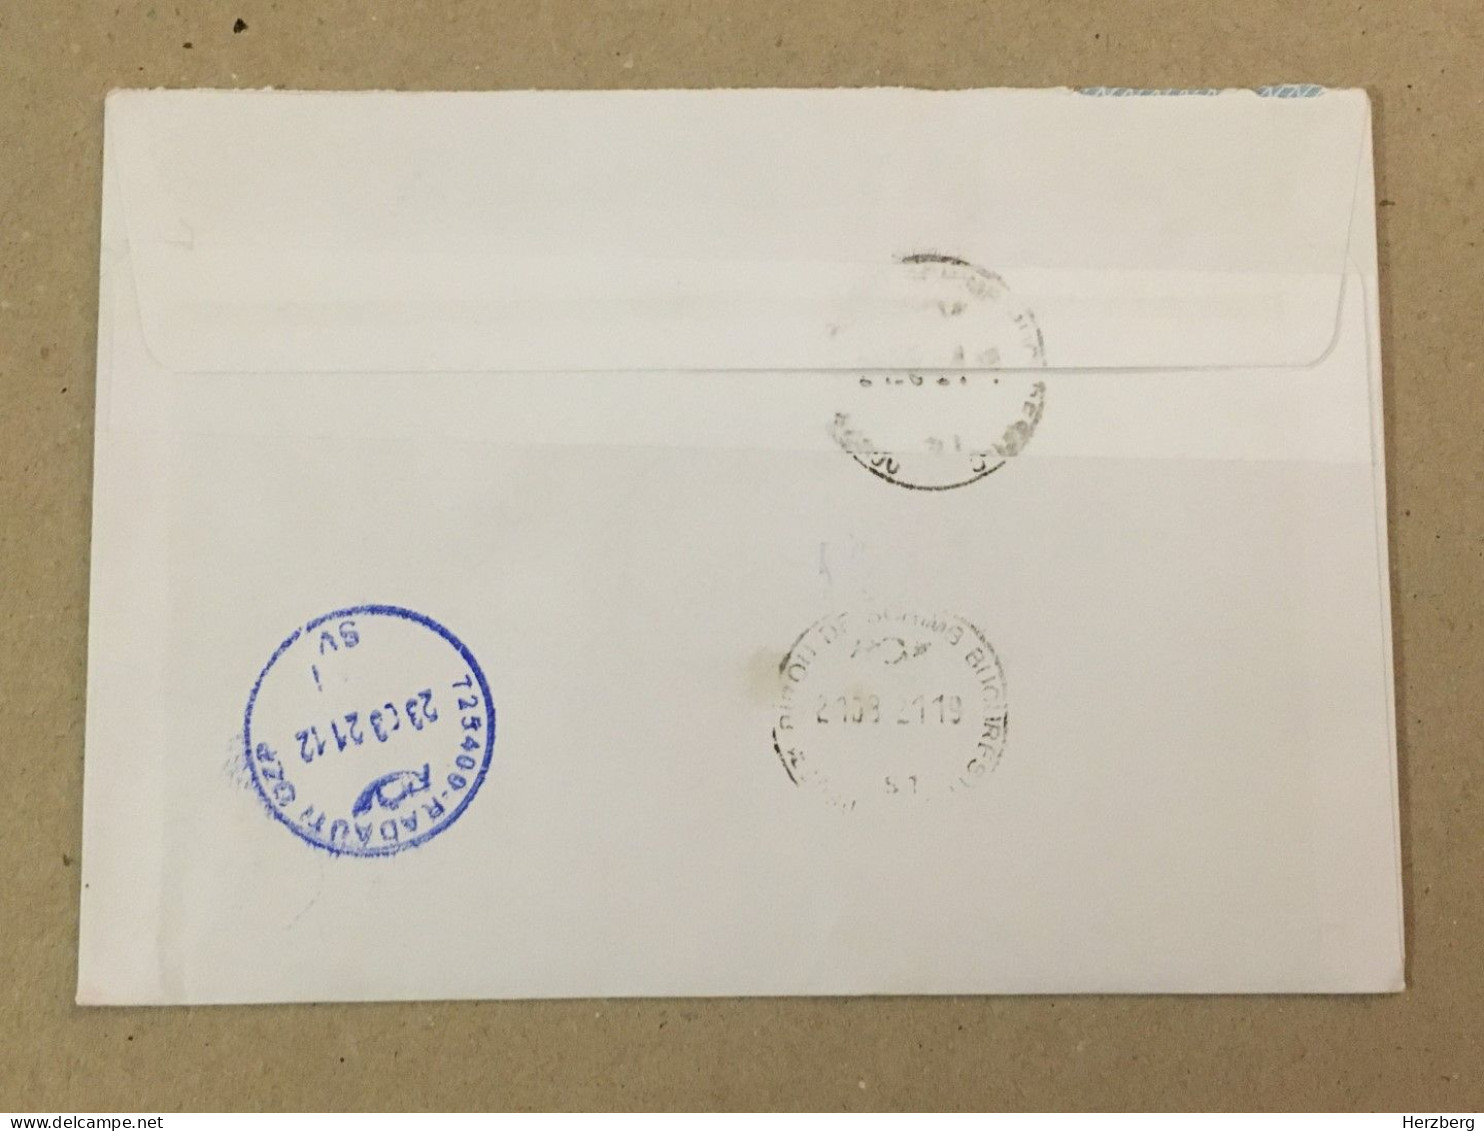 Slovakia Slovensko Used Letter Stamp Circulated Cover Registered Barcode Label Printed Sticker 2021 - Briefe U. Dokumente